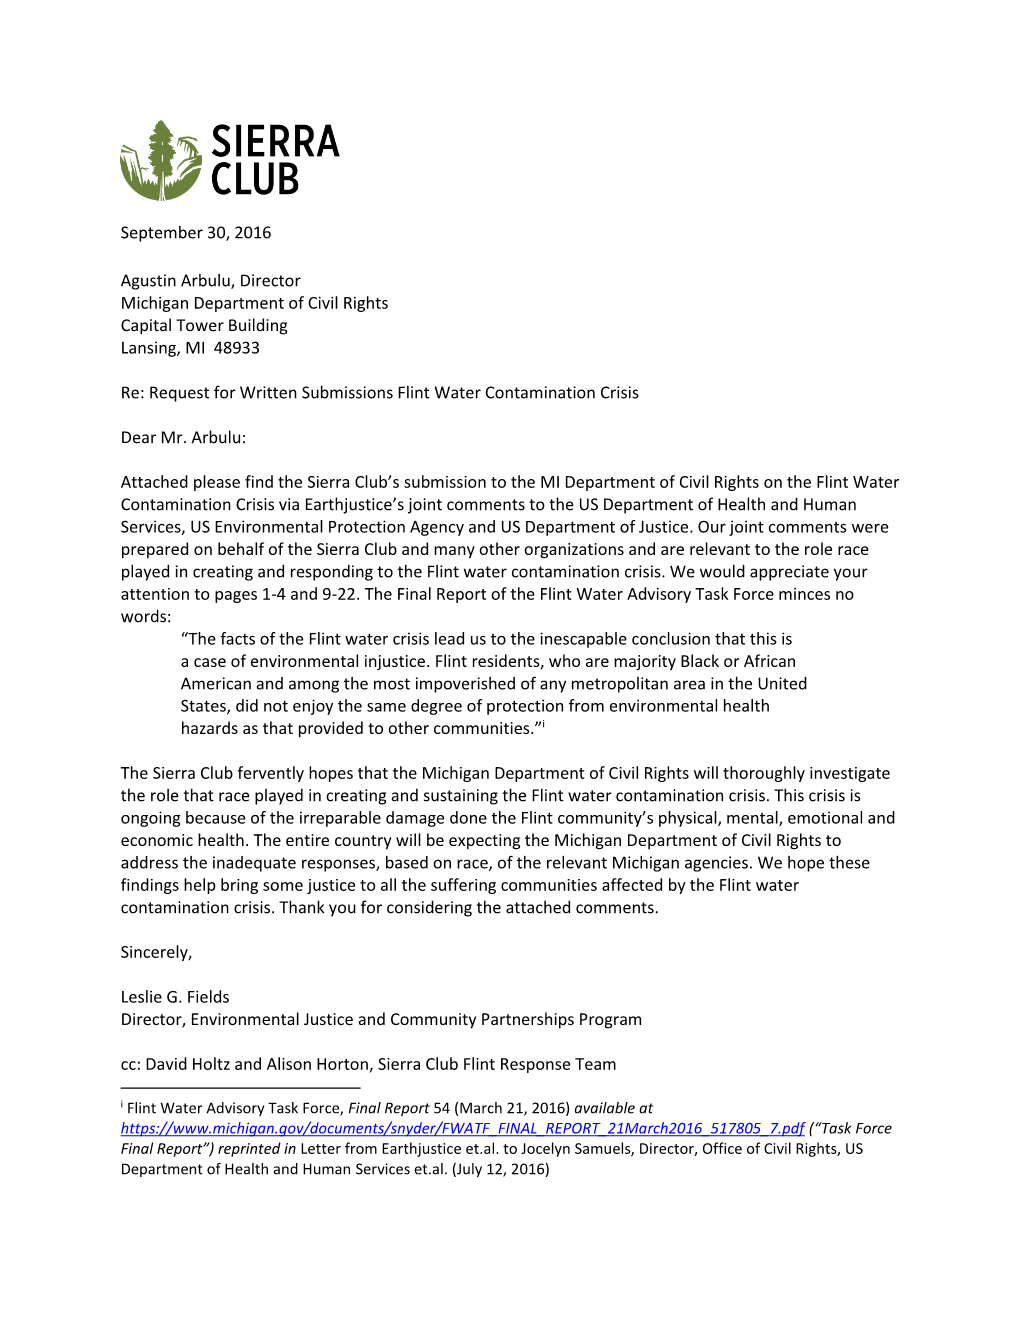 Sierra Club/Earthjustice Testimony